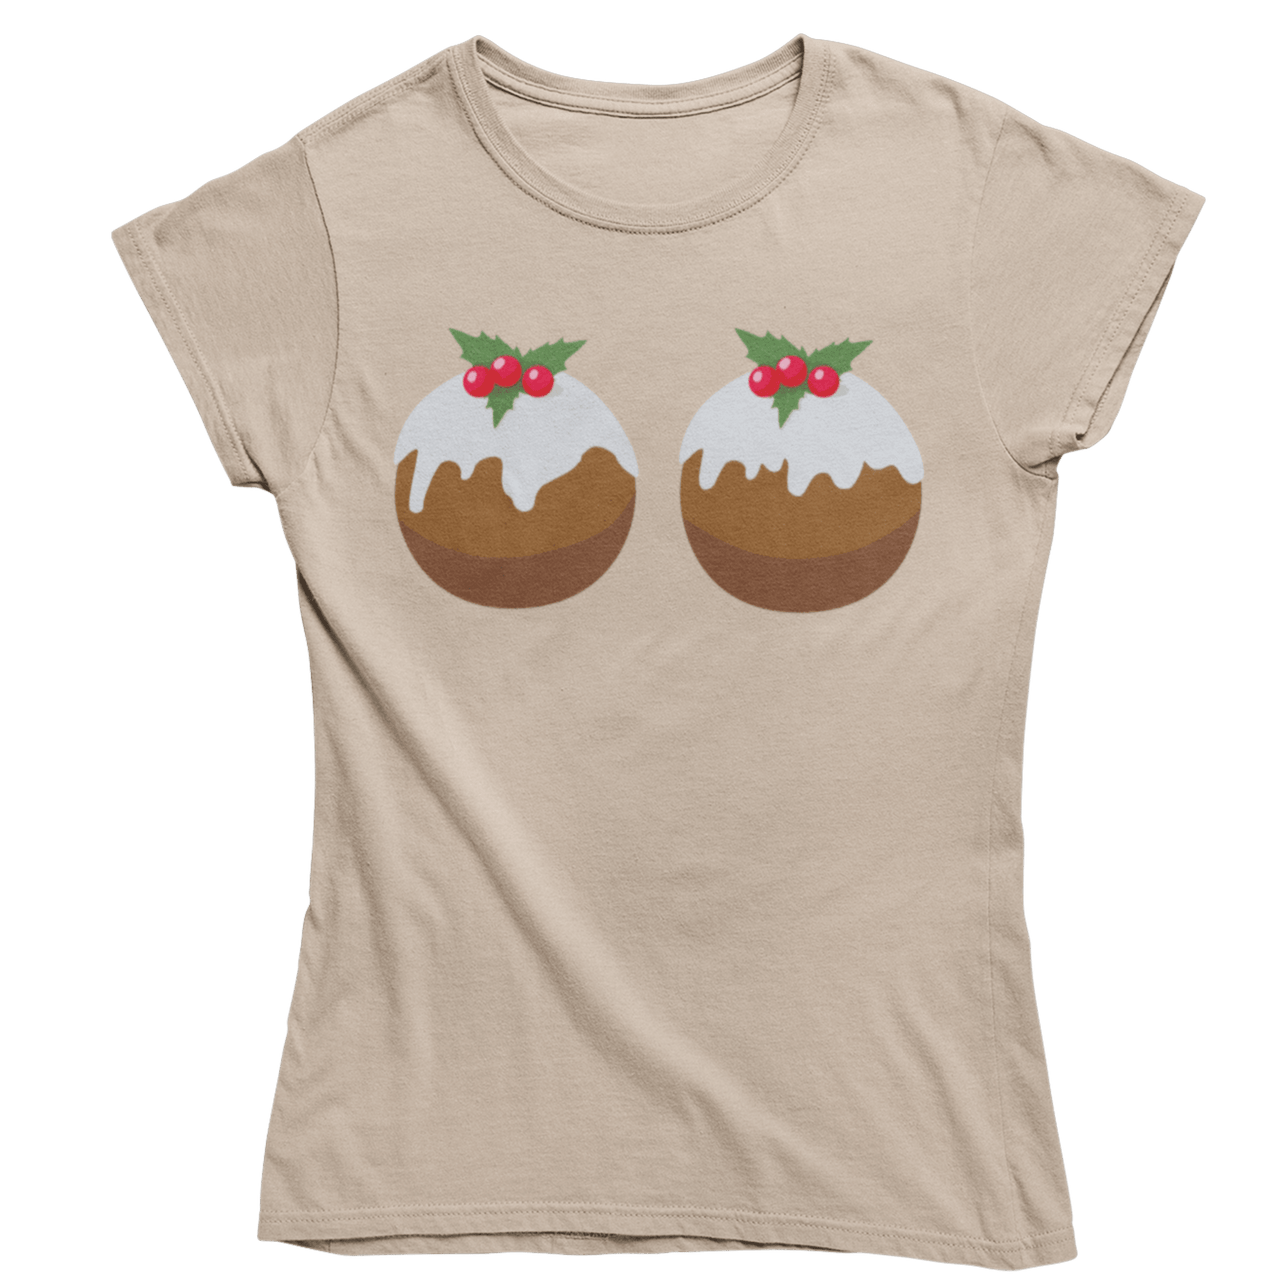 Fun Christmas Puddings T-Shirt for Women 8Ball